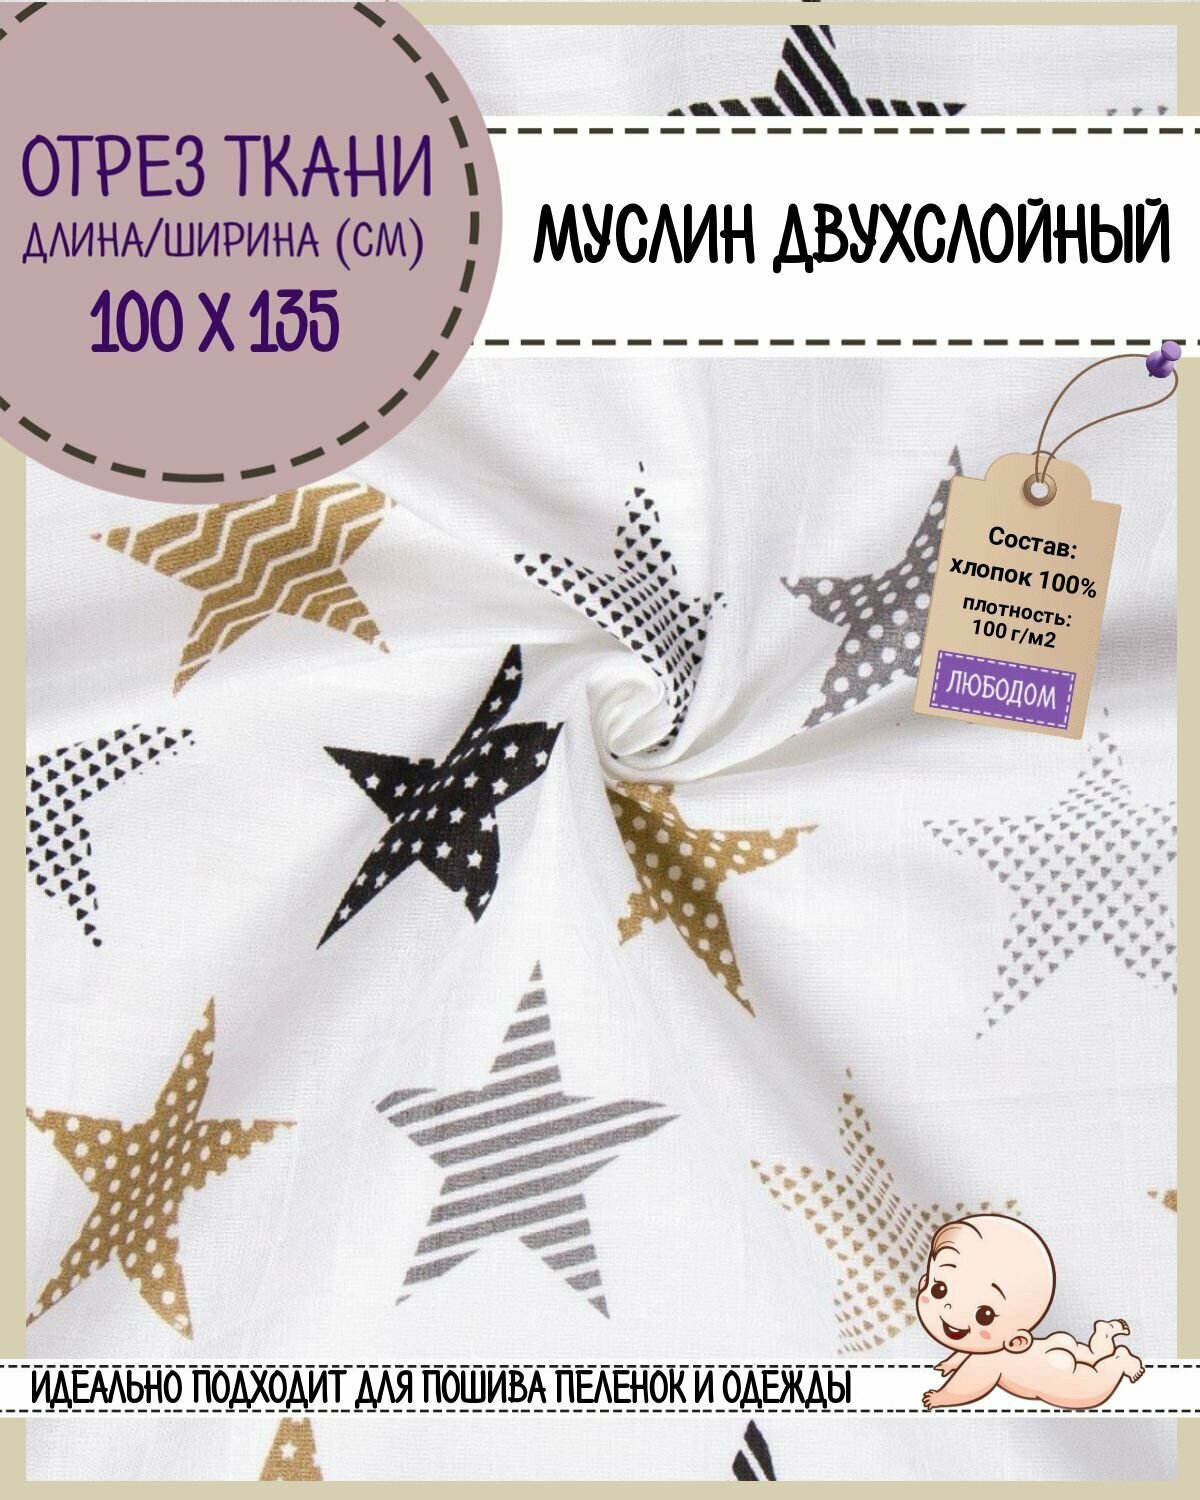 Отрез ткани Муслин двухслойный "Звезды пэчворк бежевые" для детских пеленок, ш-135 см, пл. 100 г/м2, цена за отрез 100*135 см